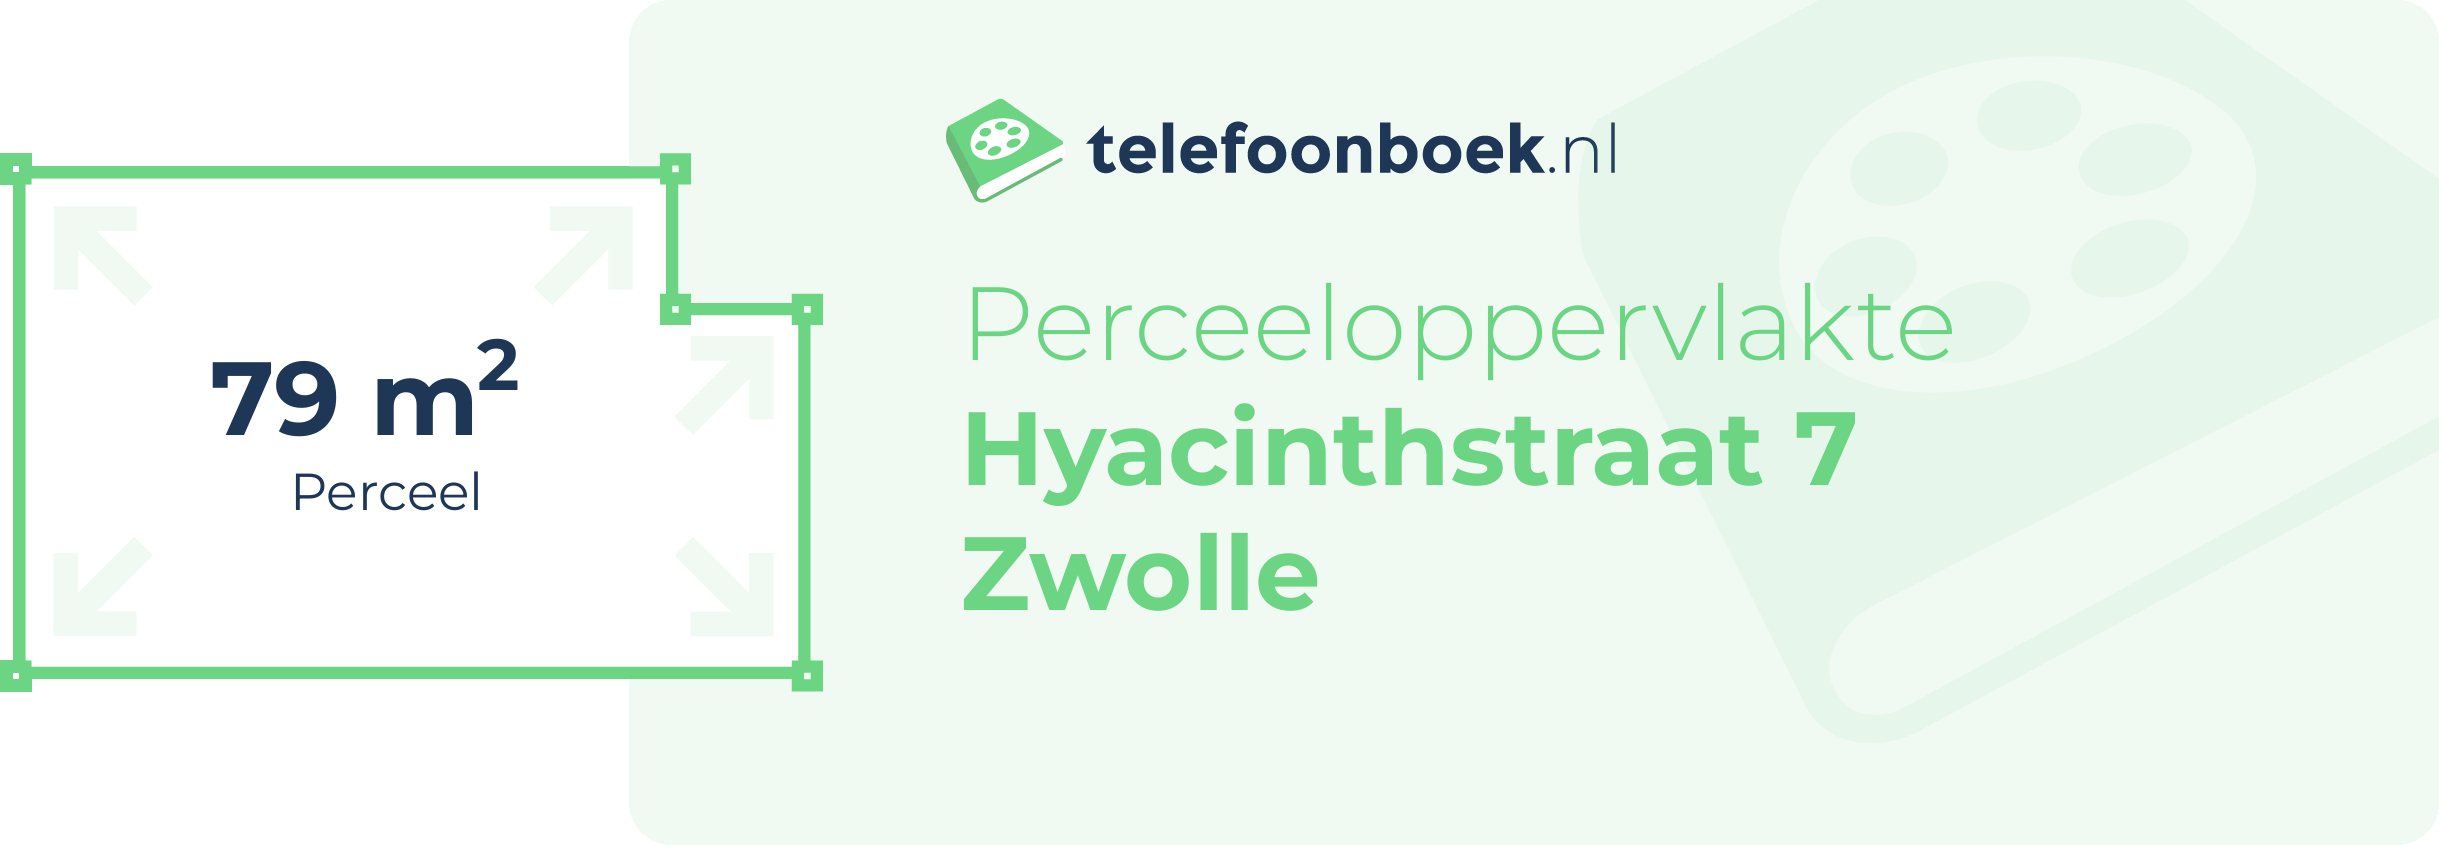 Perceeloppervlakte Hyacinthstraat 7 Zwolle